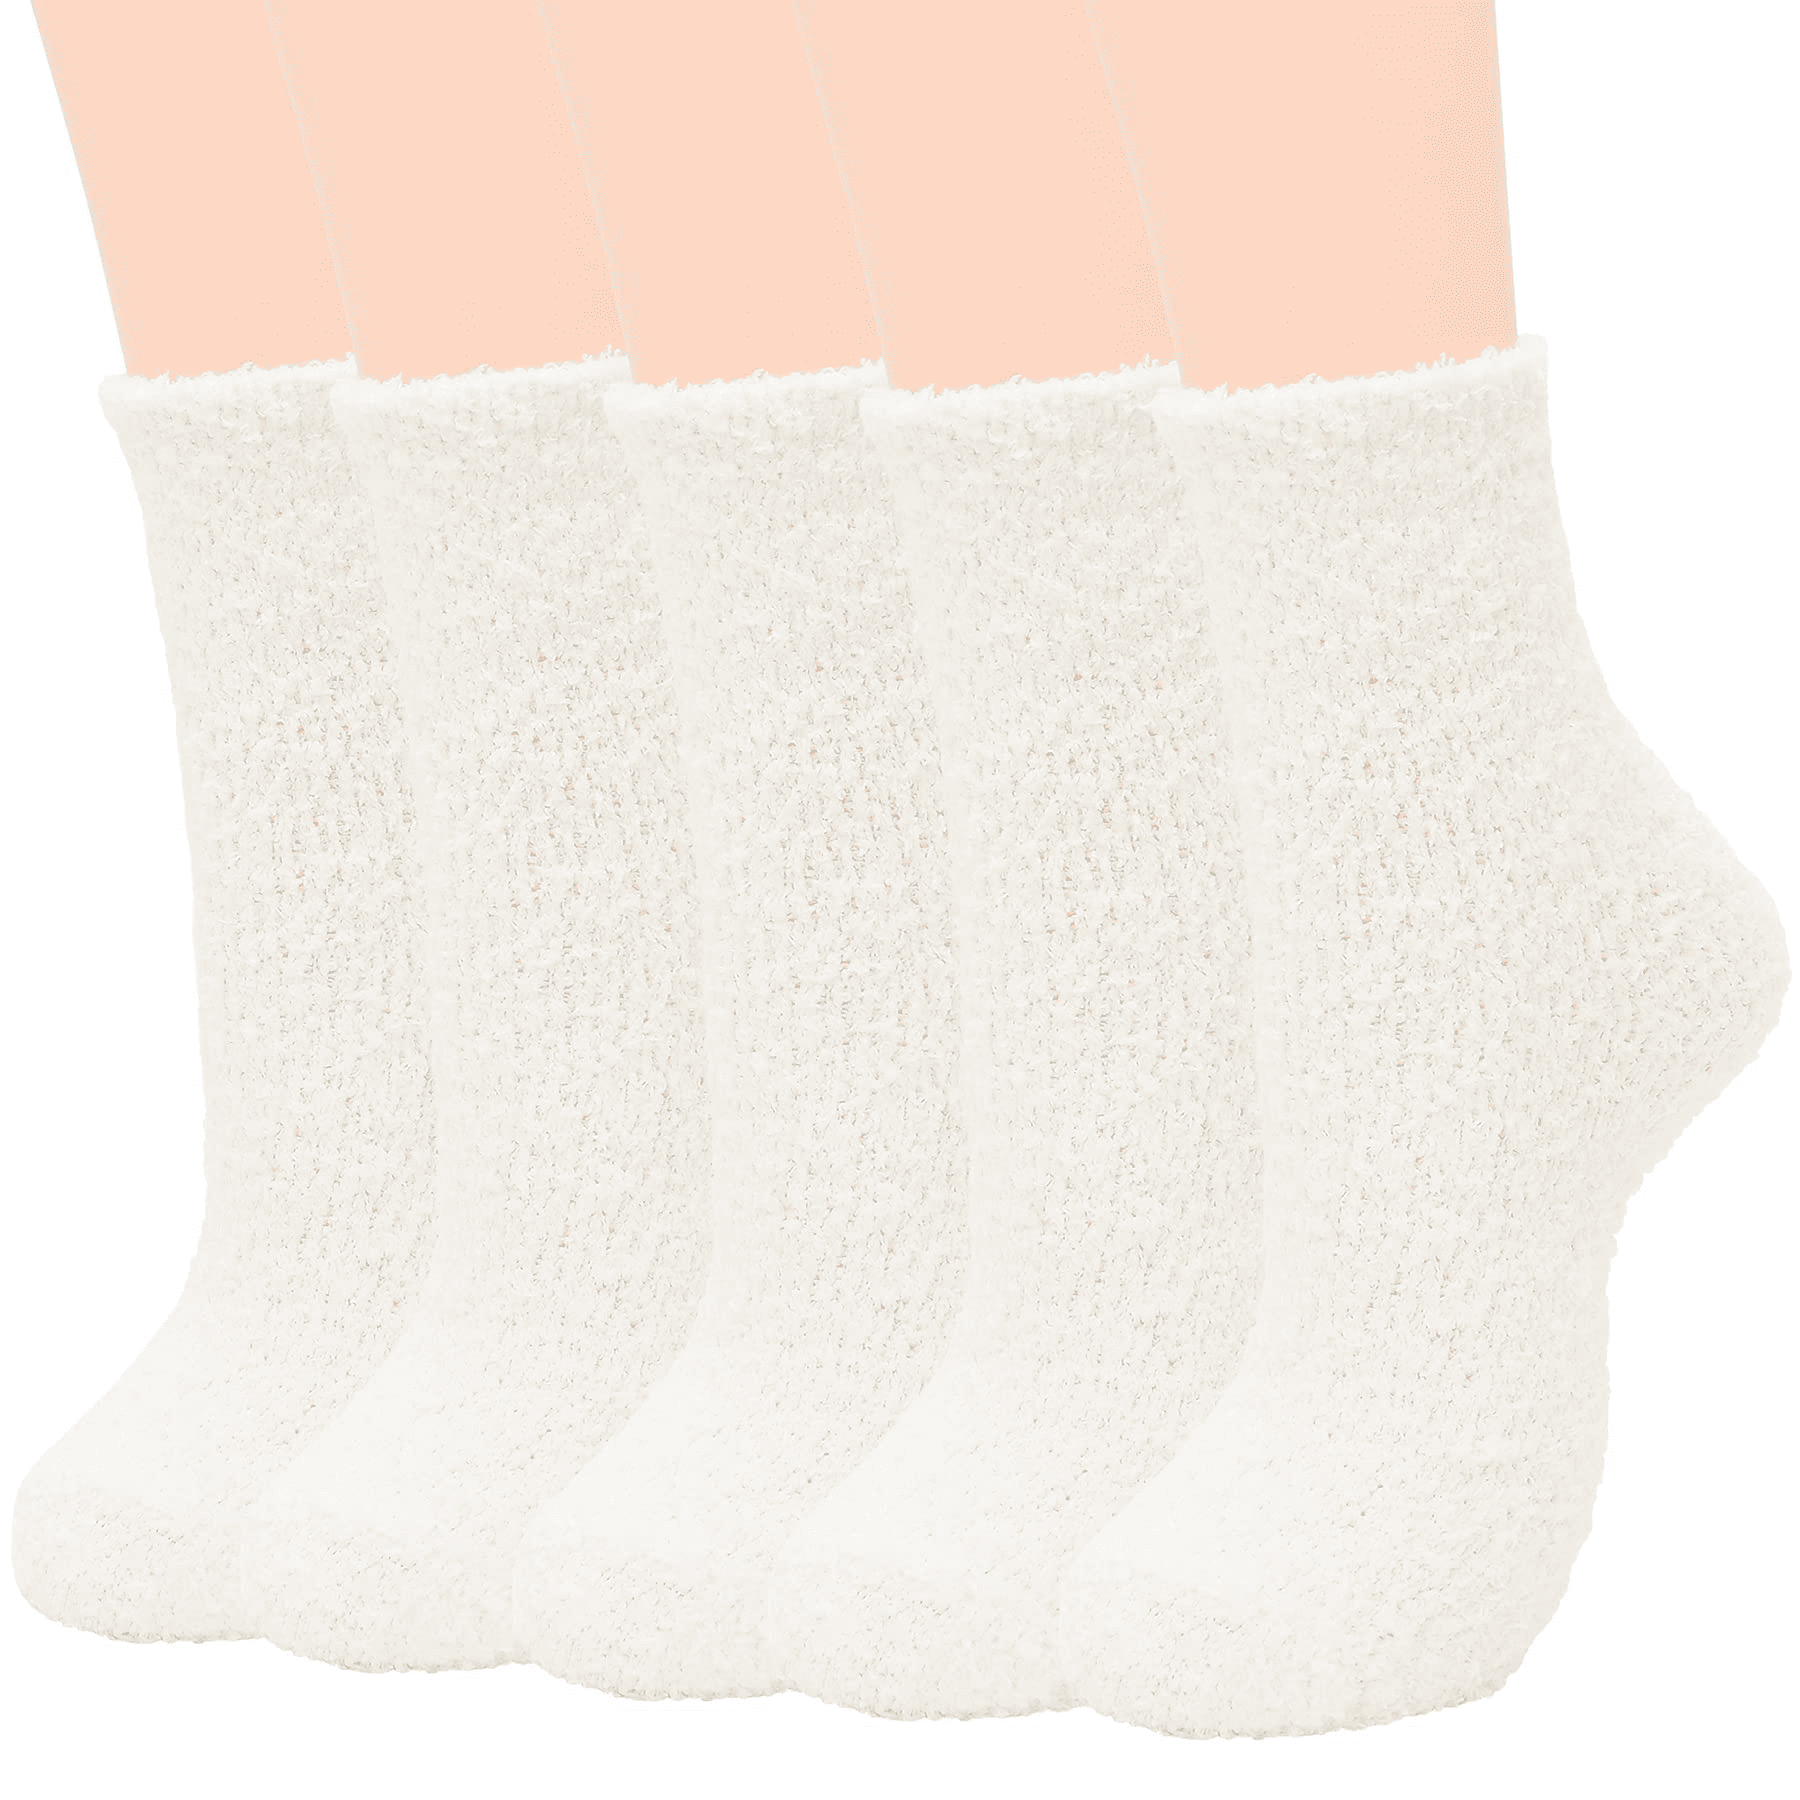 Zando Womens Fuzzy Socks White Socks Cozy Socks Fluffy Socks for Women ...